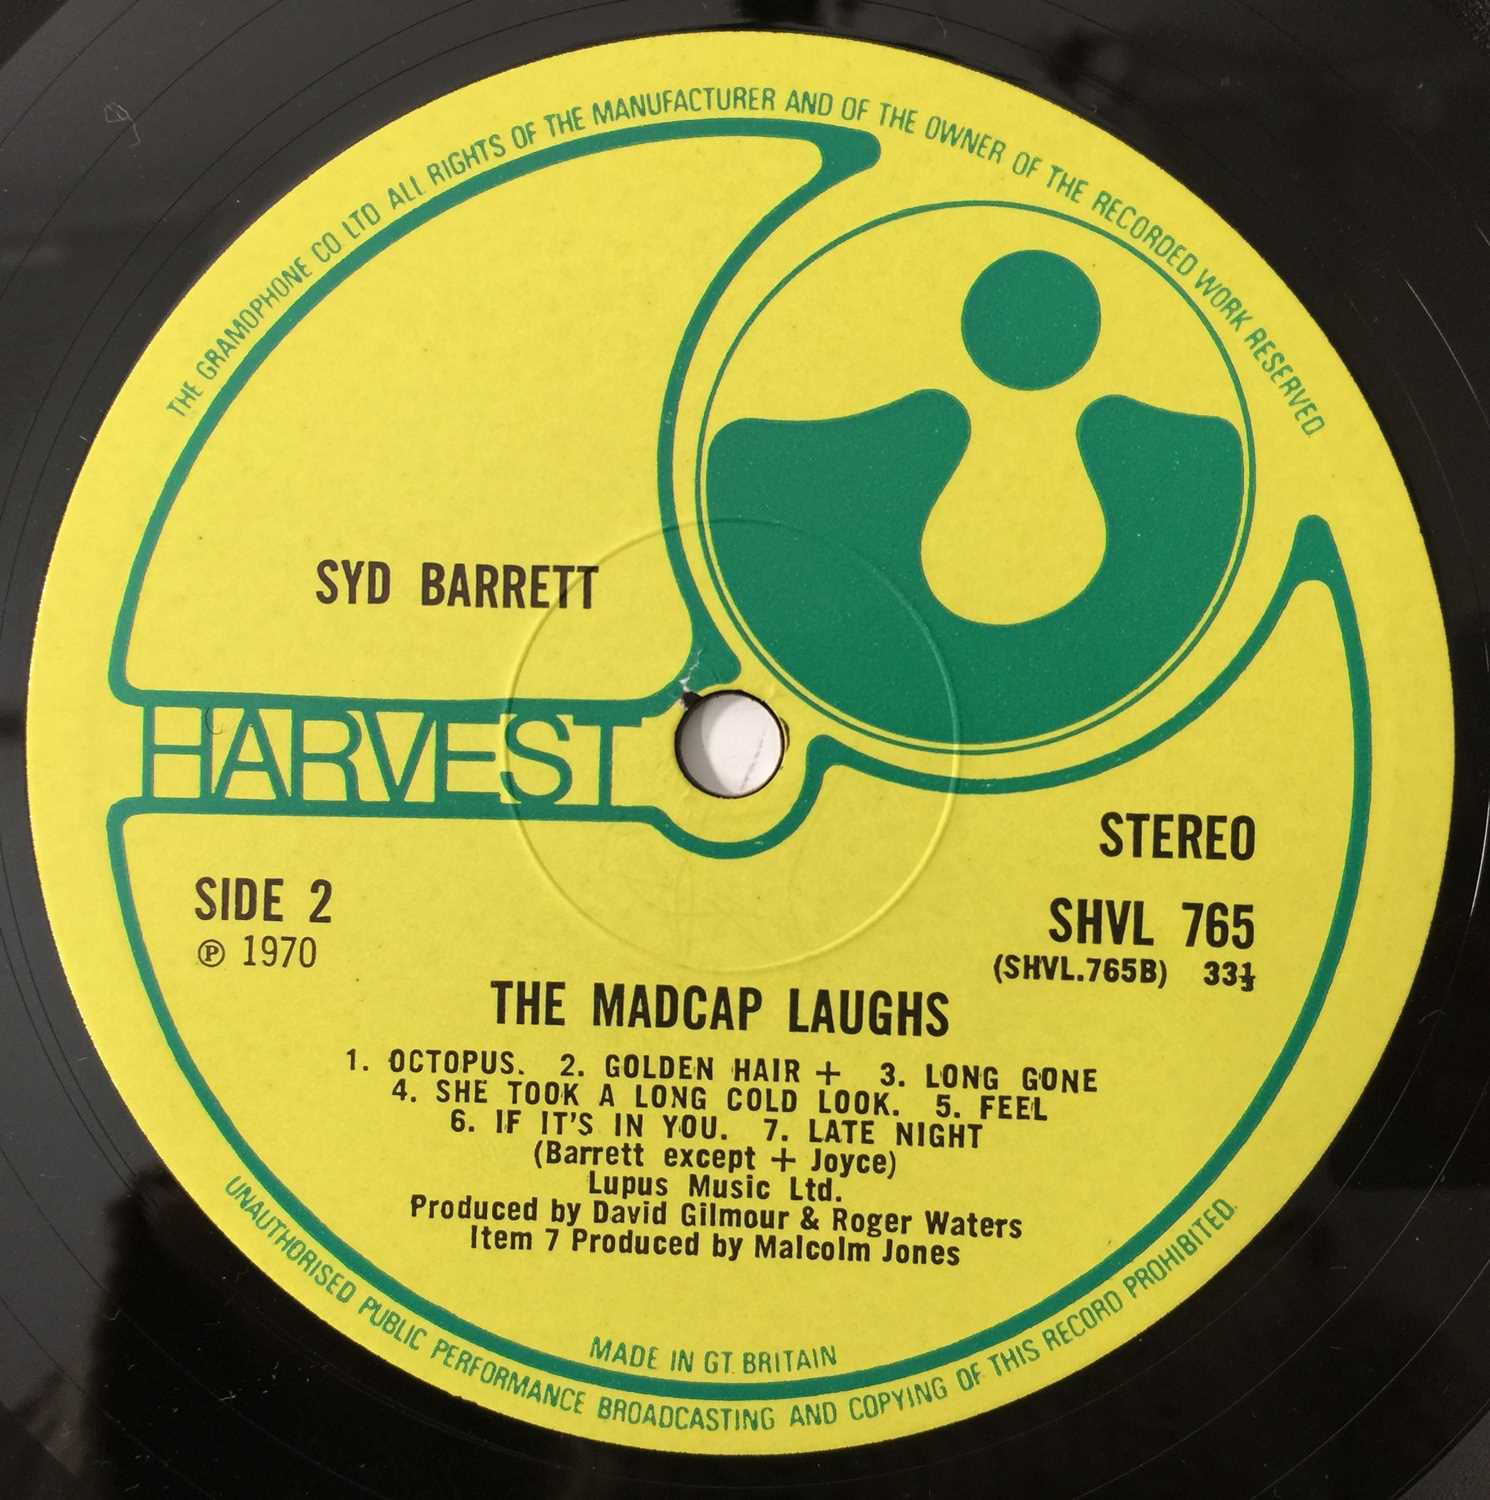 SYD BARRETT - THE MADCAP LAUGHS LP (ORIGINAL UK COPY - HARVEST SHVL 765) - Image 5 of 8